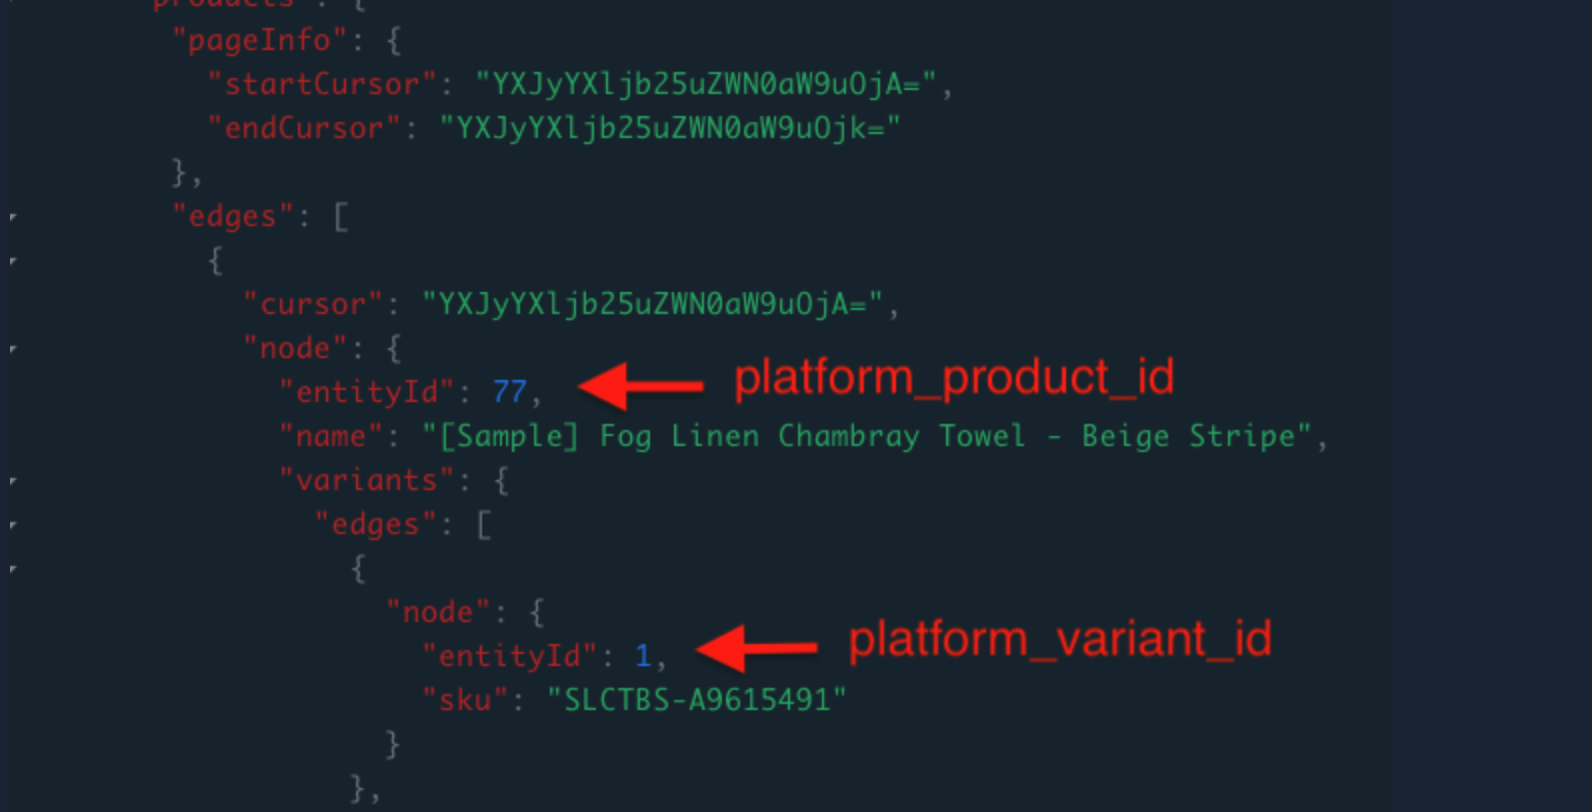 platform_variant_id